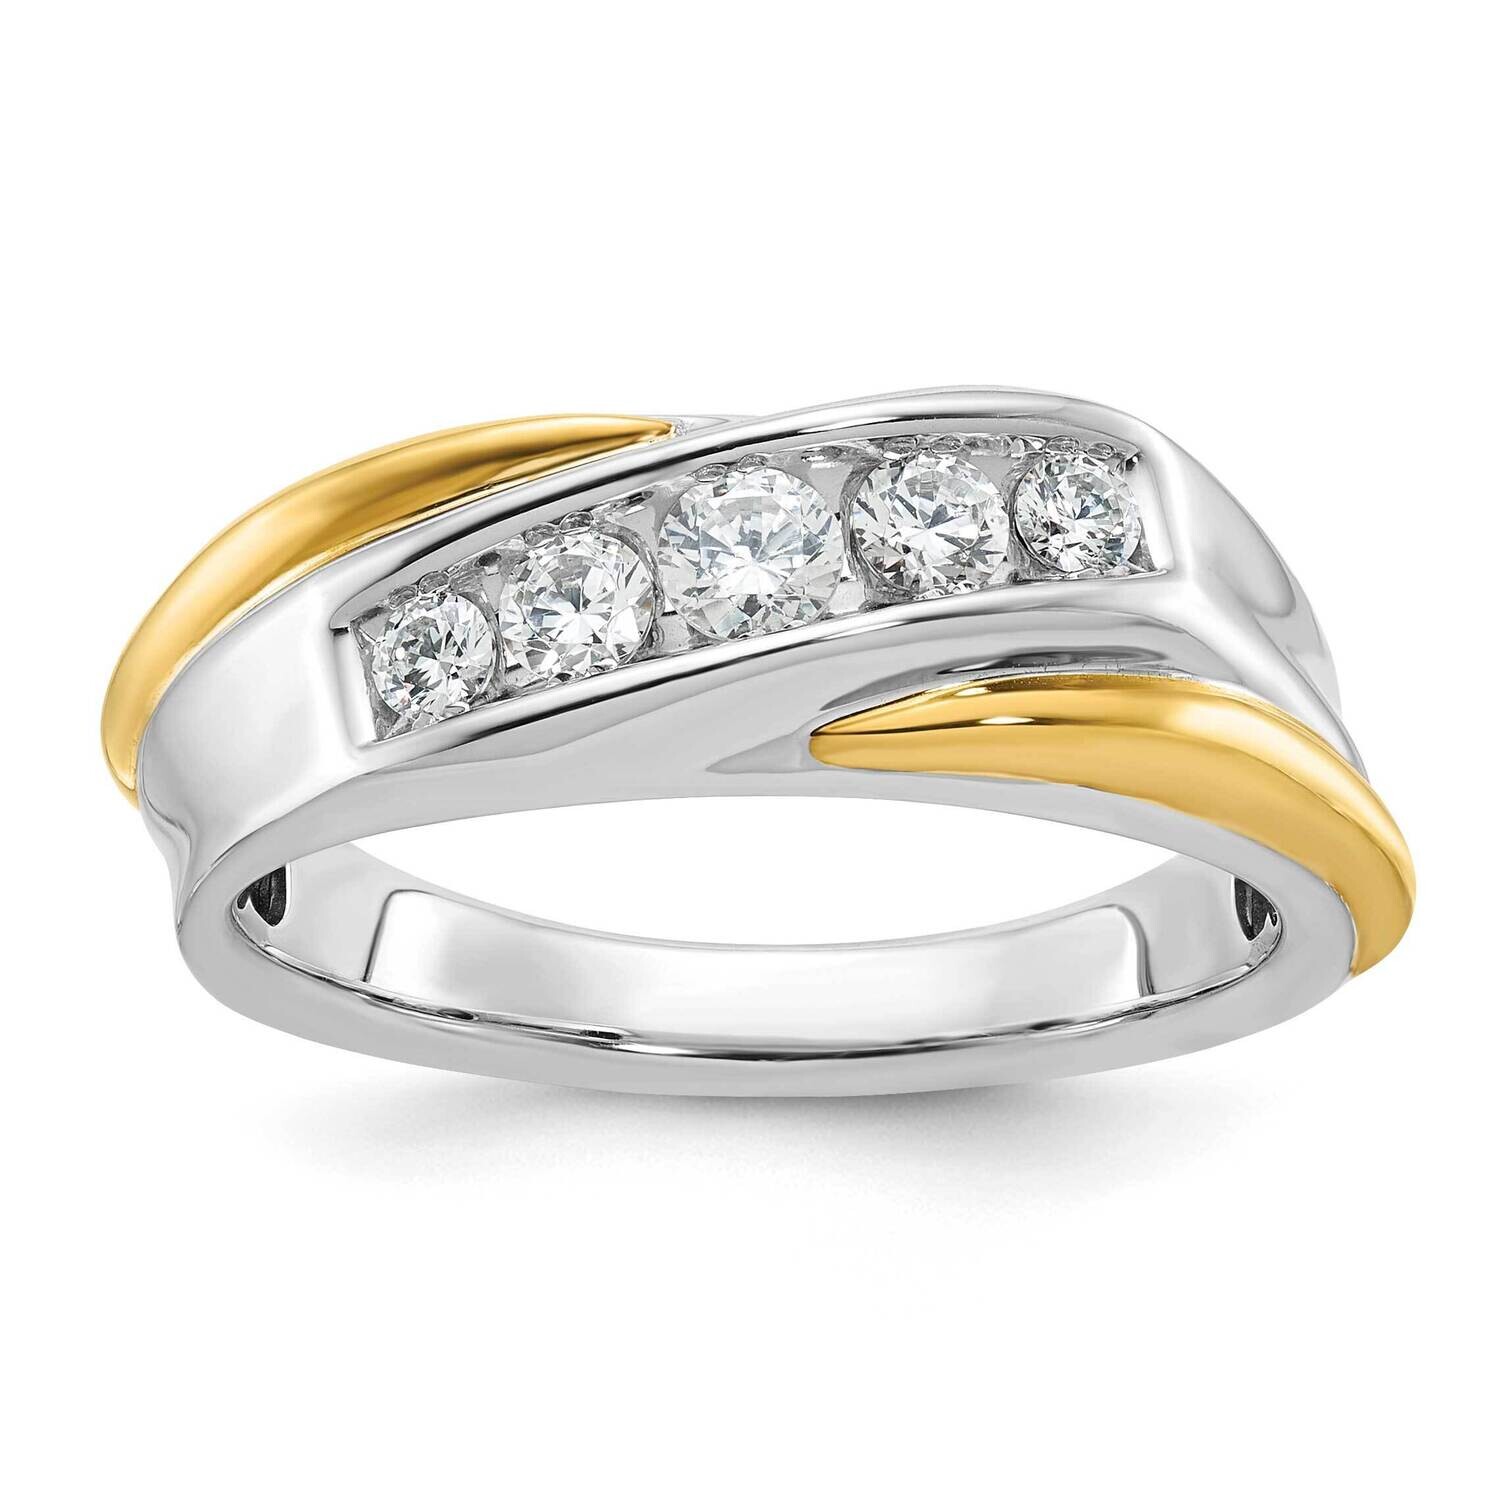 Ibgoodman Men's Polished Grooved 5-Stone 1/2 Carat Aa Quality Diamond Ring 14k Two-Tone Gold B64110-4WYAA